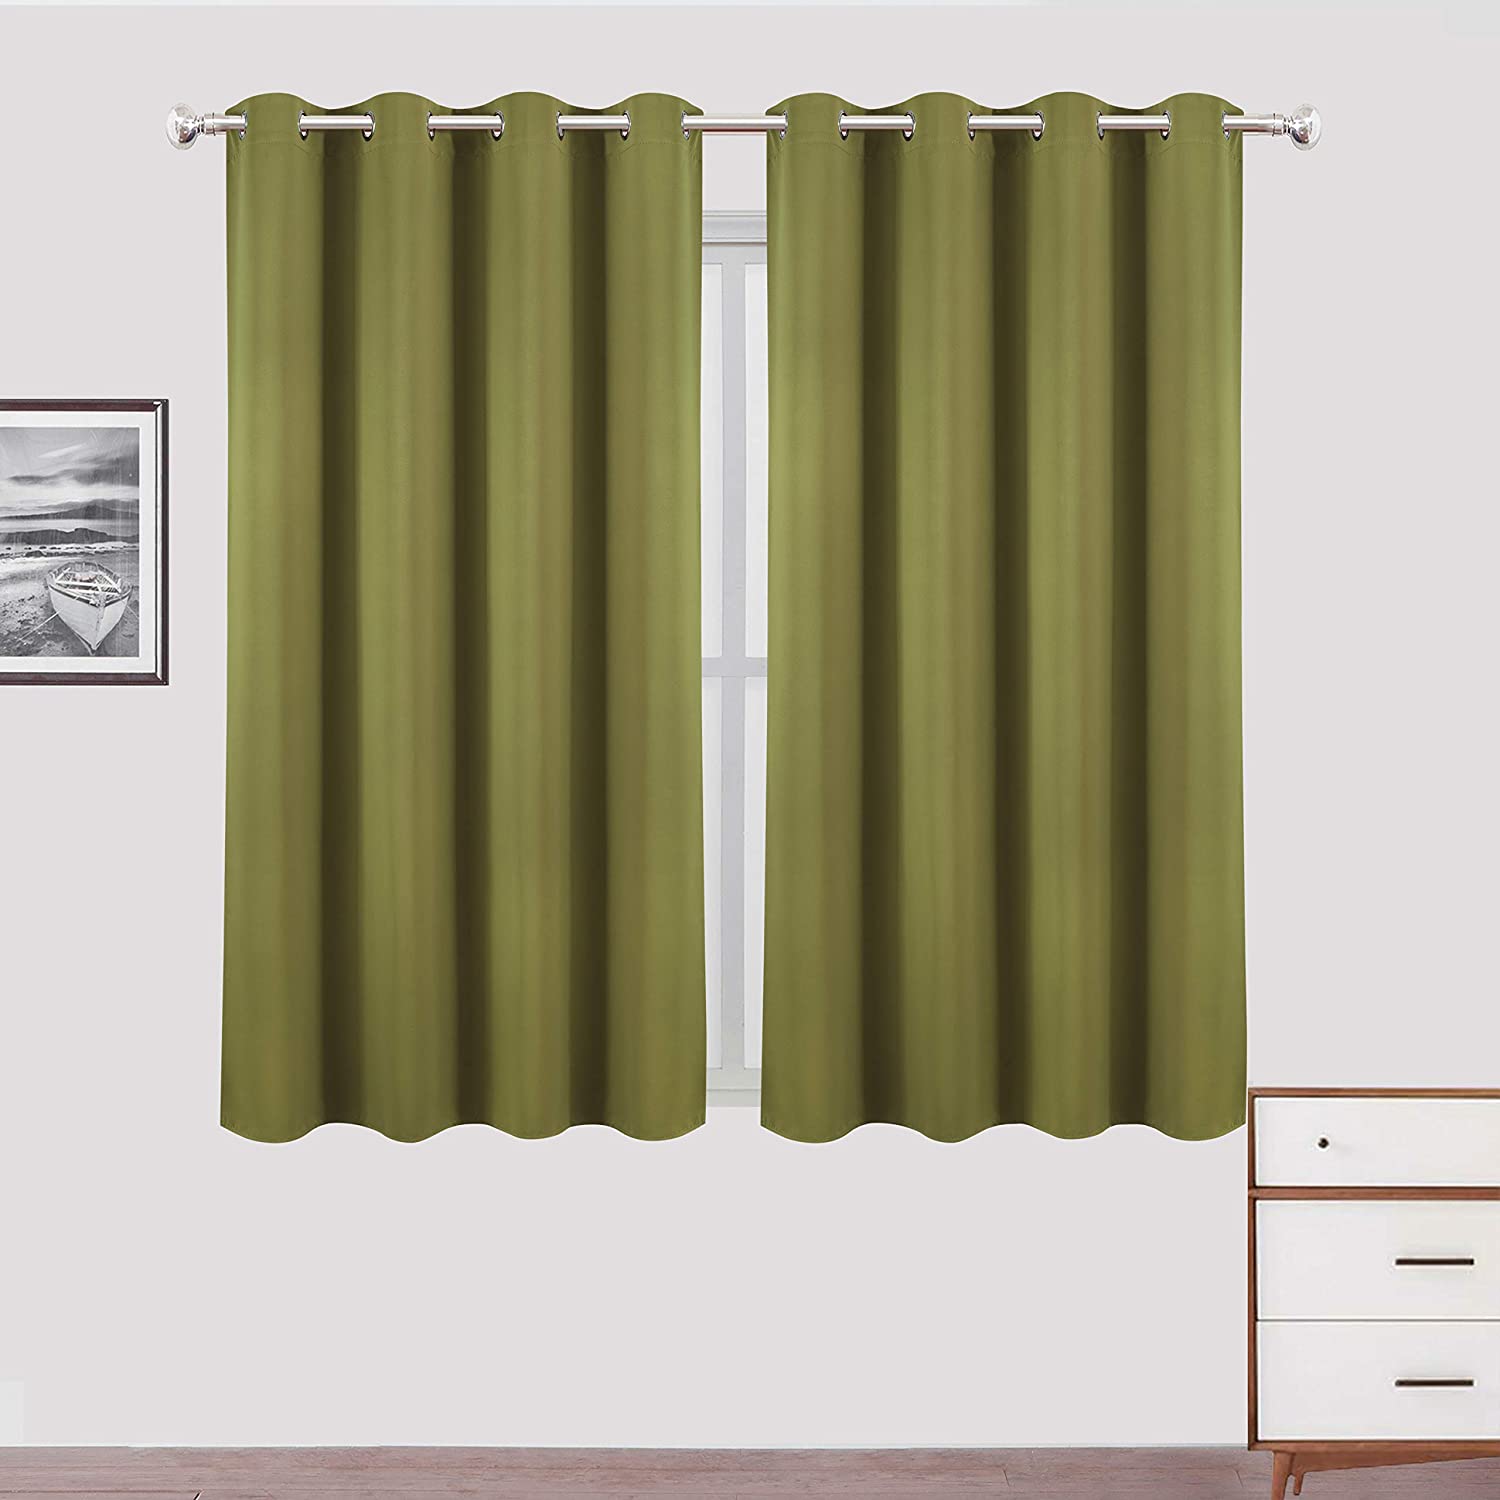 LEMOMO Red Thermal Blackout Curtains/38 x 54 Inch/Set of 2 Panels